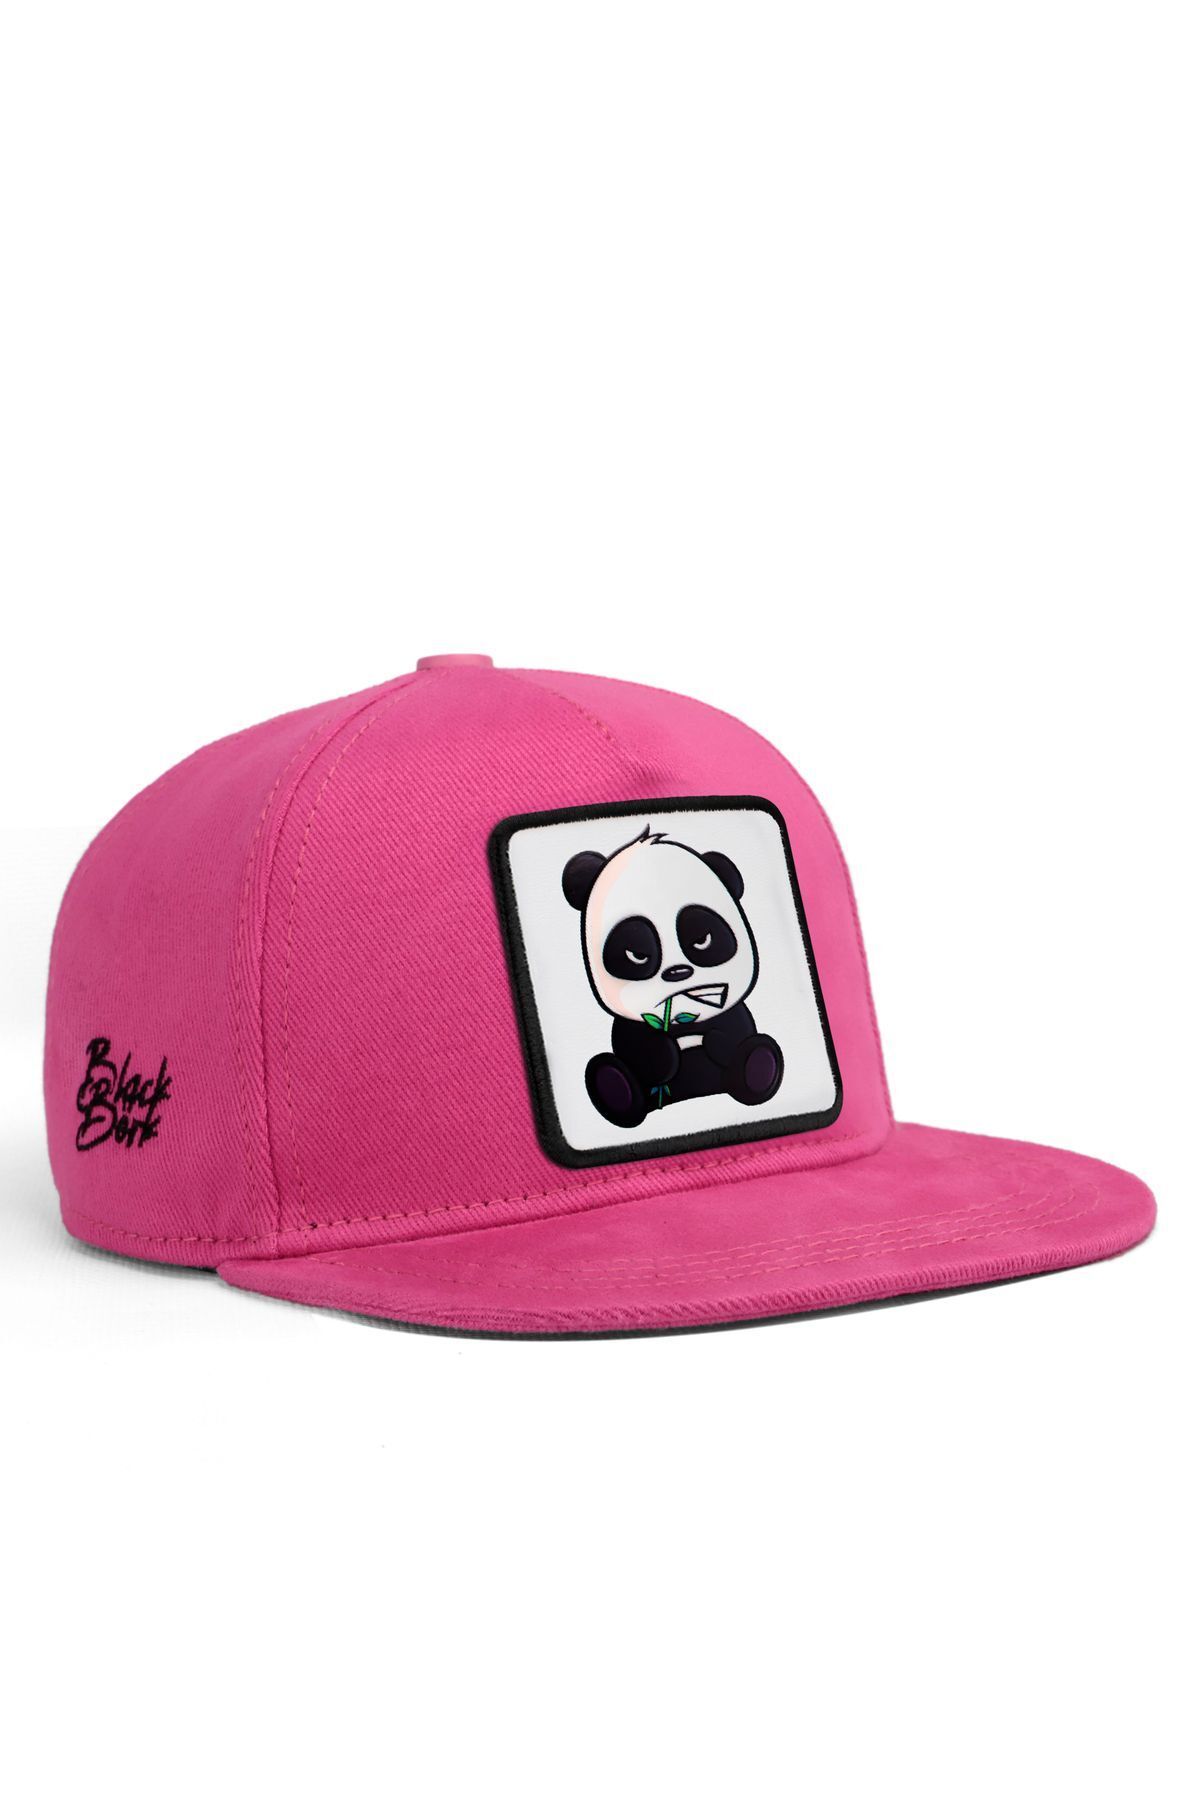 BlackBörk V1 Hip Hop Kids Panda - 3bs Kod Logolu Unisex Pembe Çocuk Şapka (CAP)